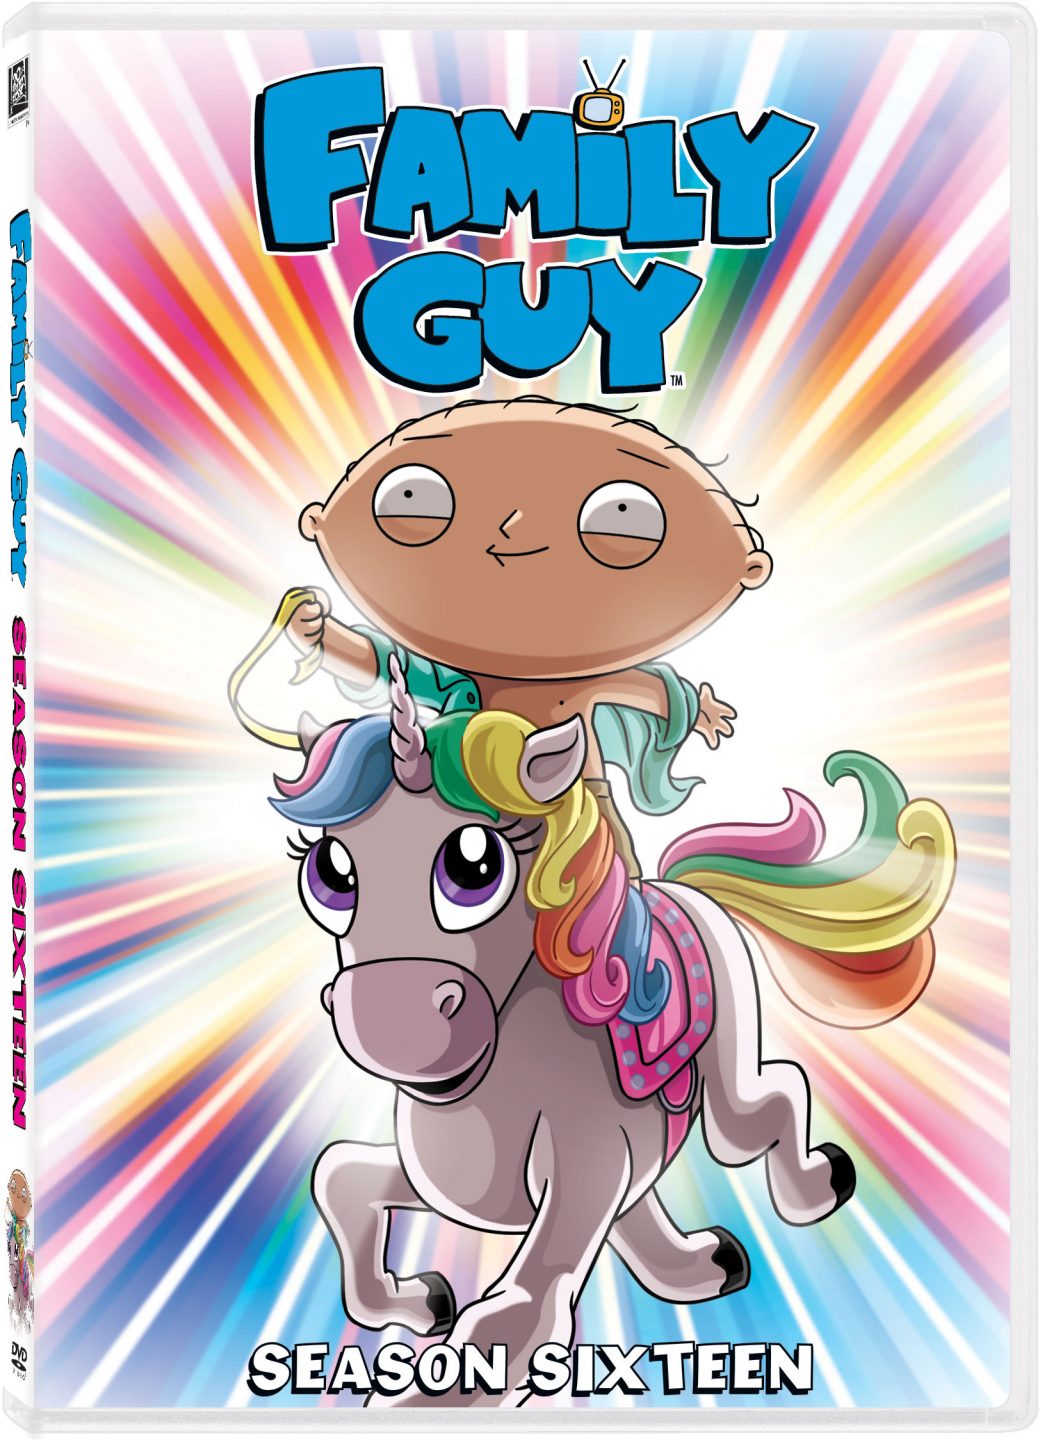 Family Guy Season 16 DVD cover (20th Century Fox Home Entertainment)